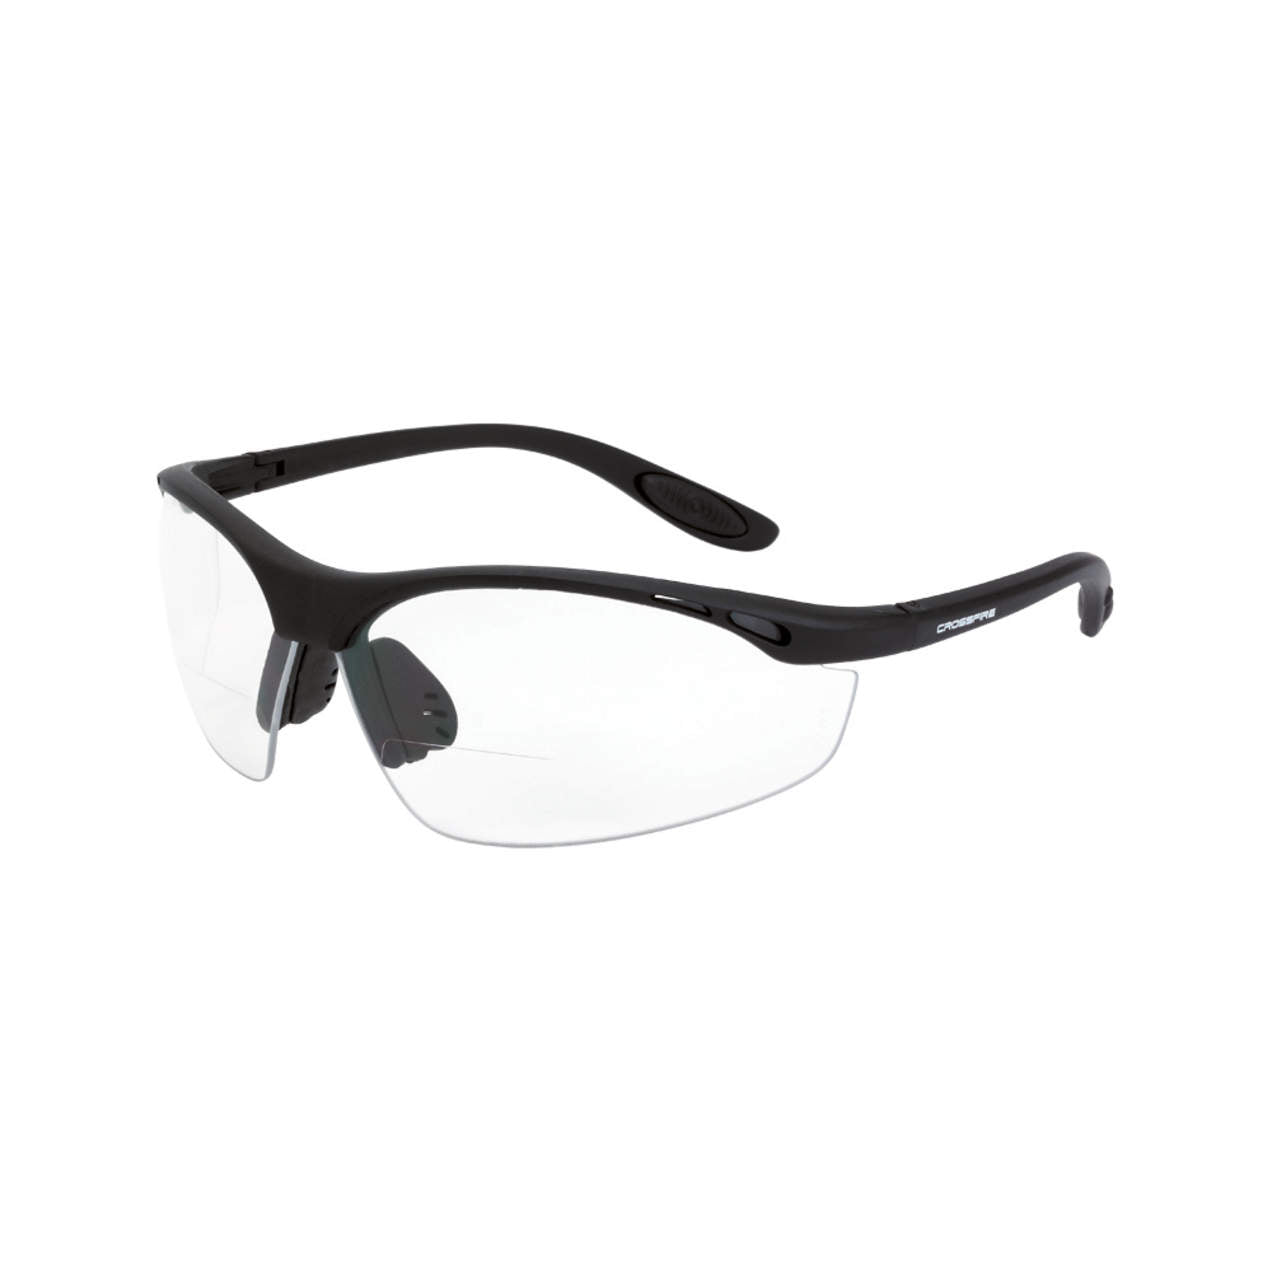 Talon Bifocal Safety Eyewear - Matte Black Frame - Clear Lens - 2.5 Diopter